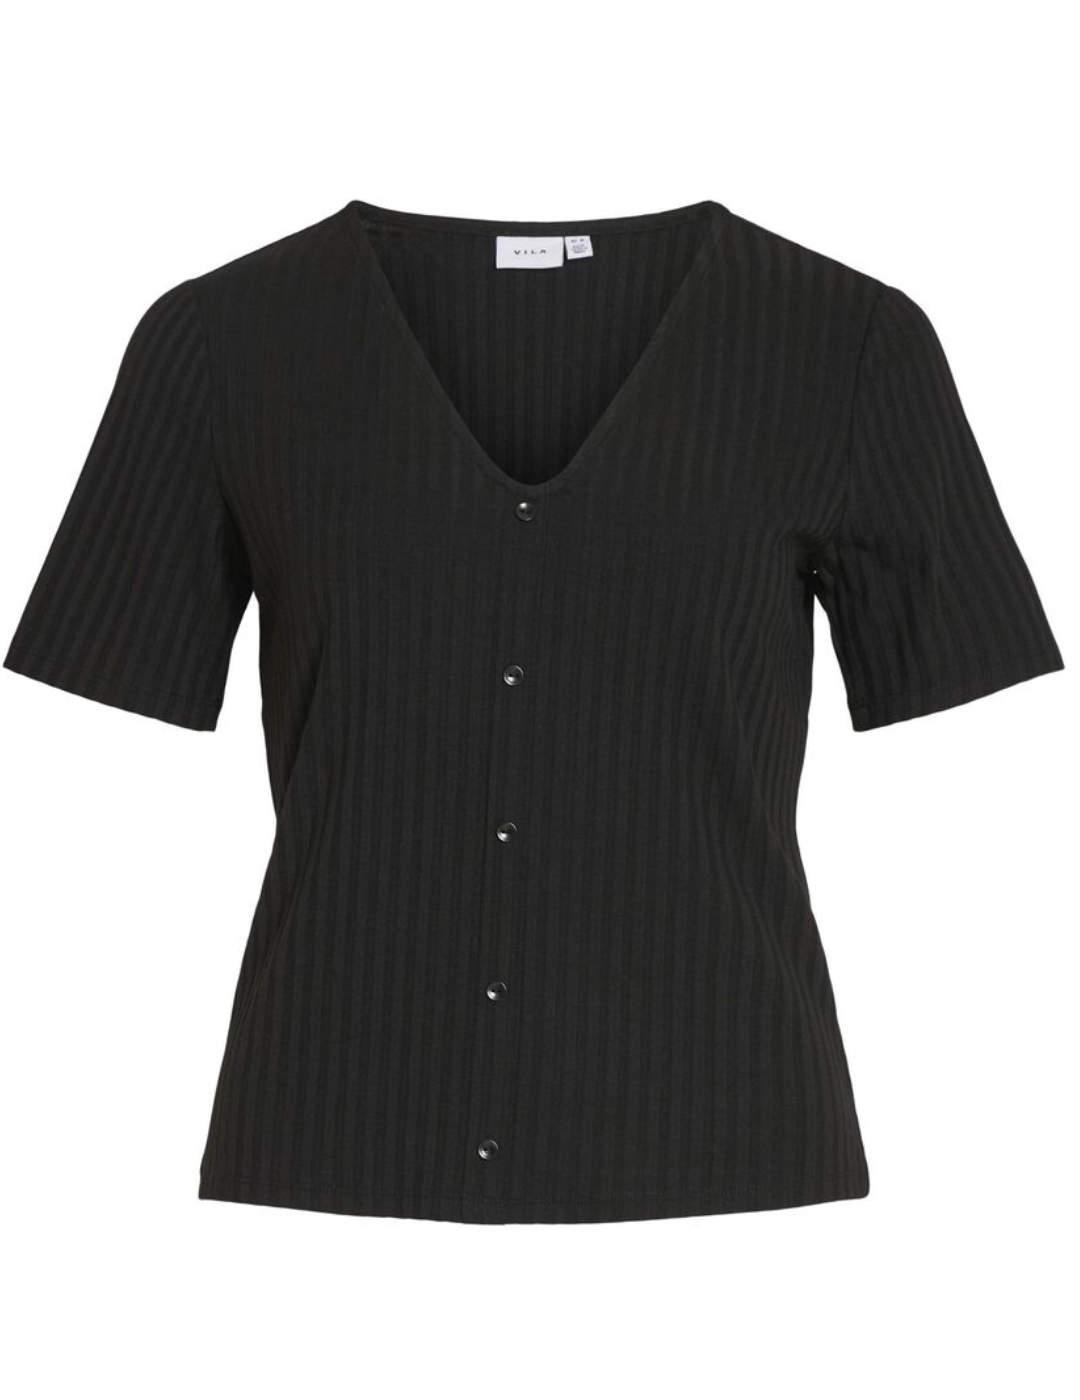 Camiseta Vila Ribini negra cuelloV botones manga corta mujer